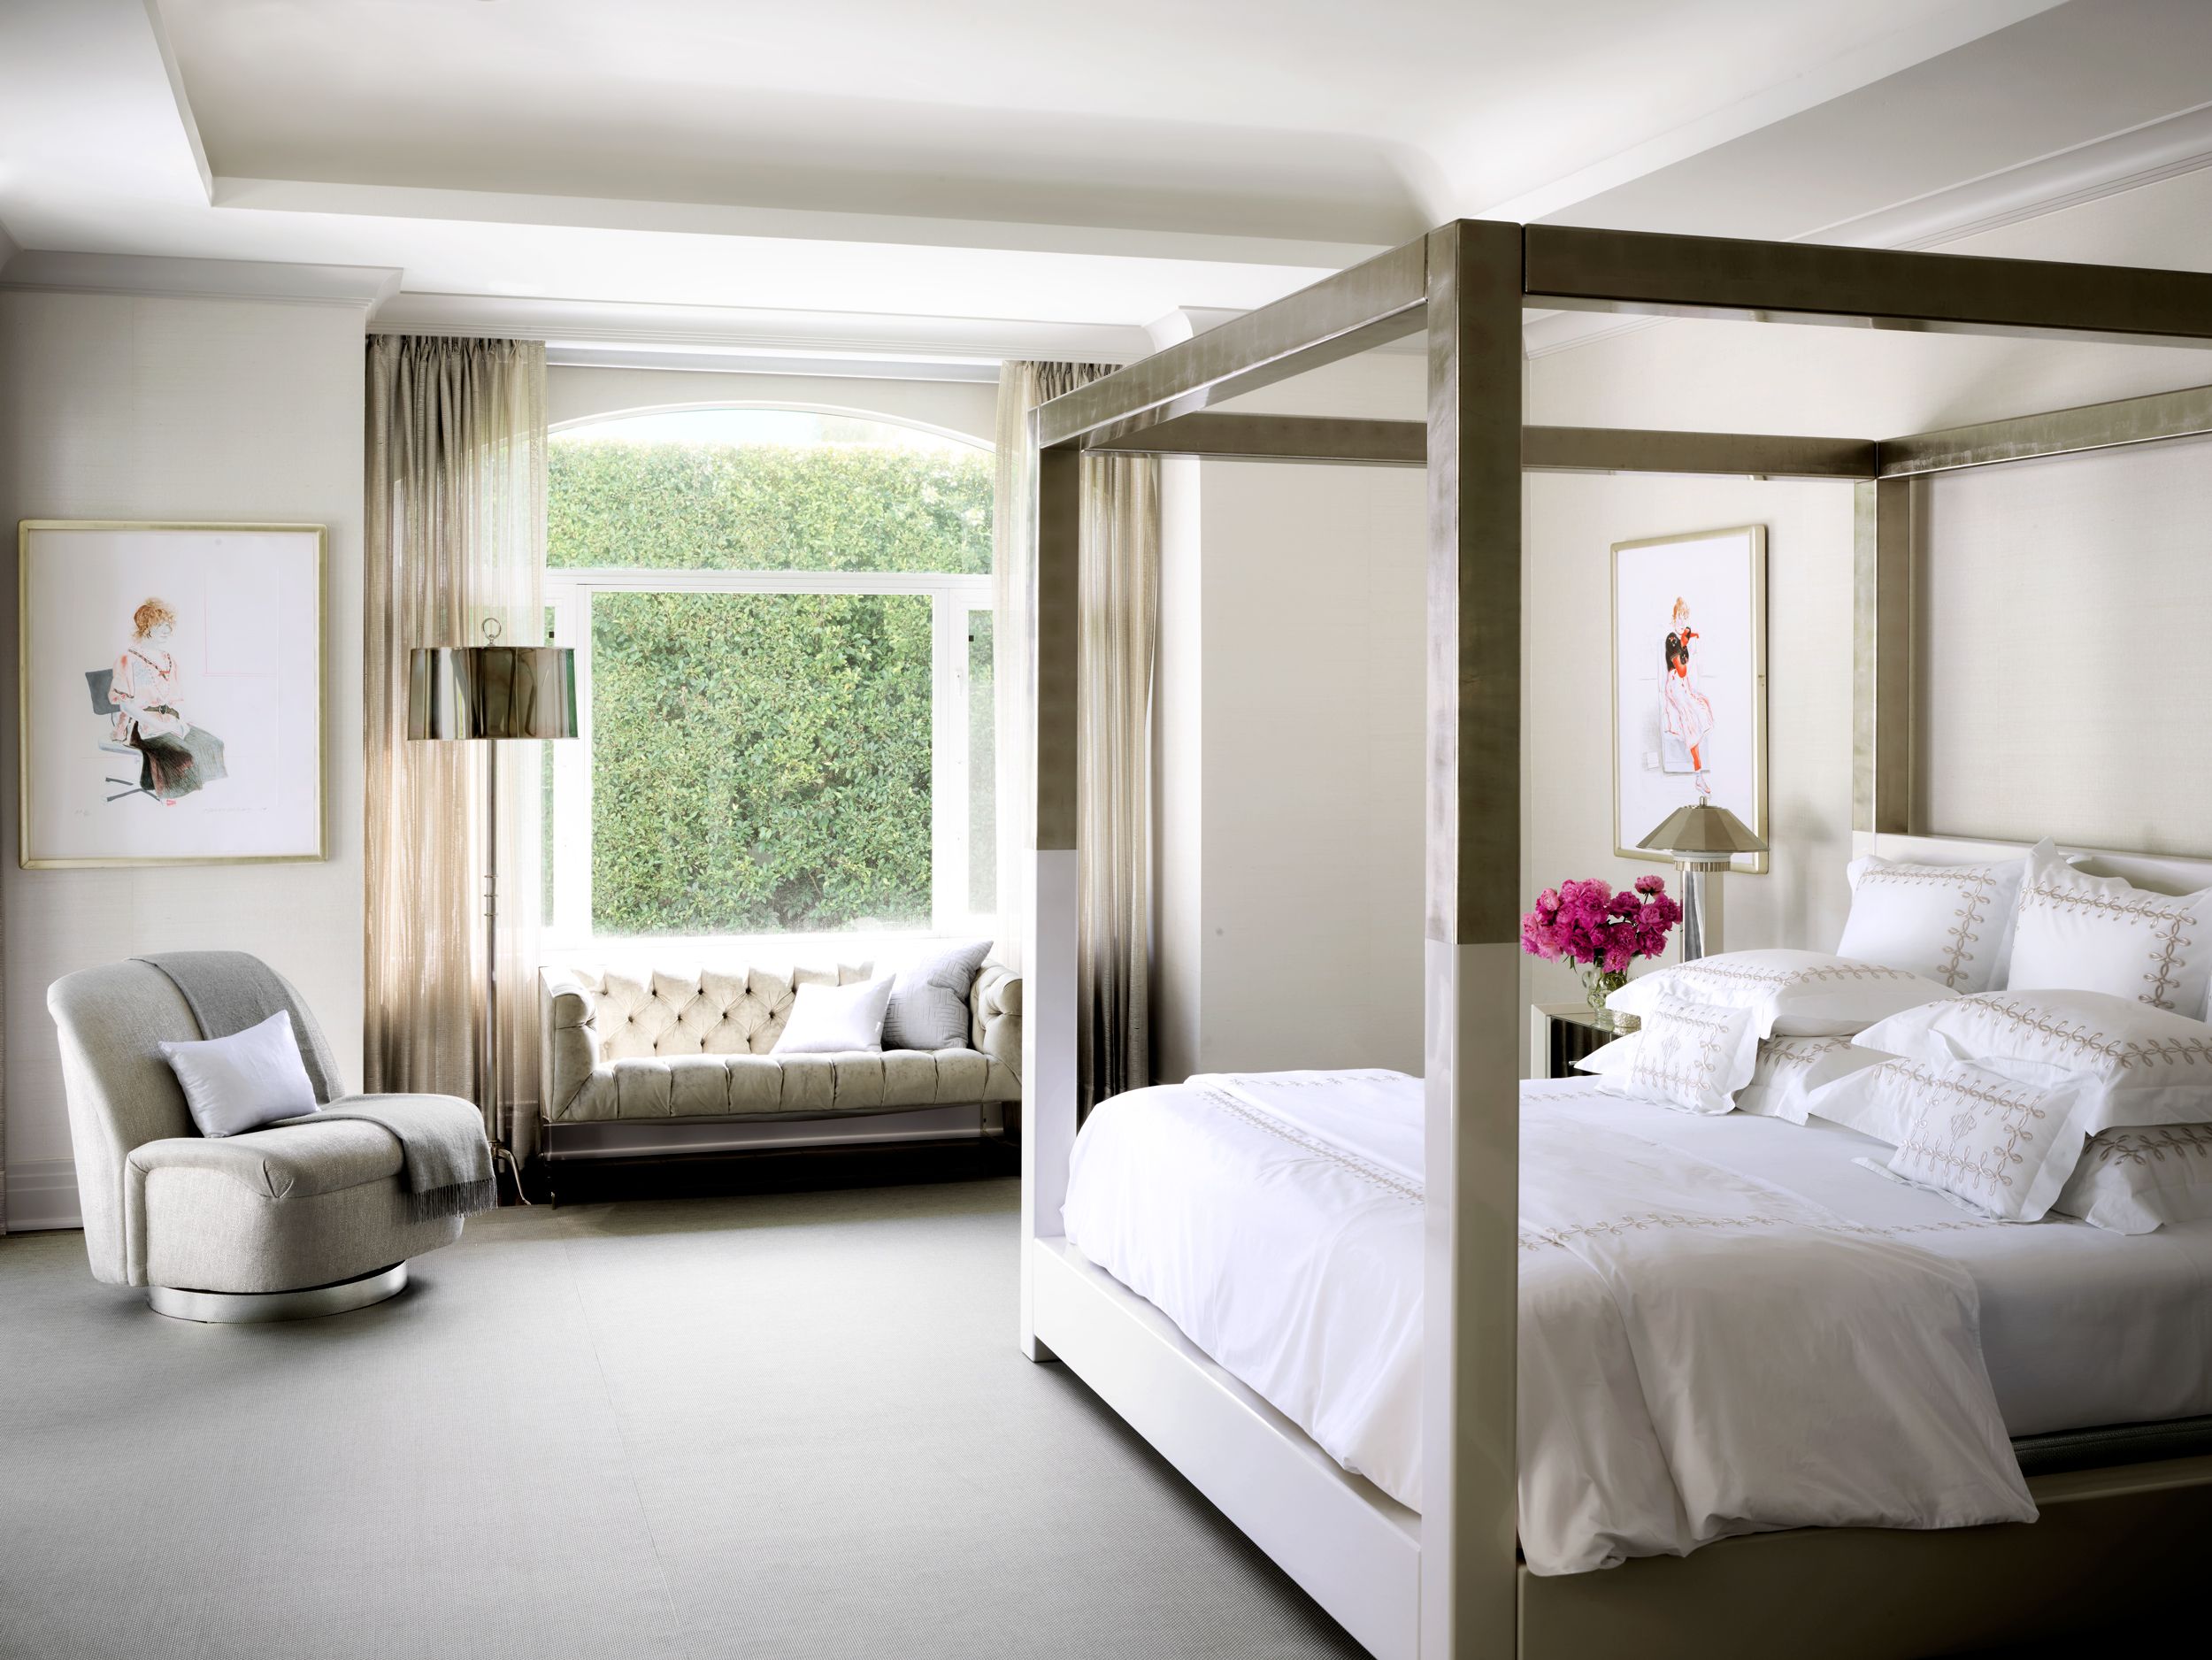 20 Inspiring Modern Bedroom Ideas   Best Modern Bedroom Designs